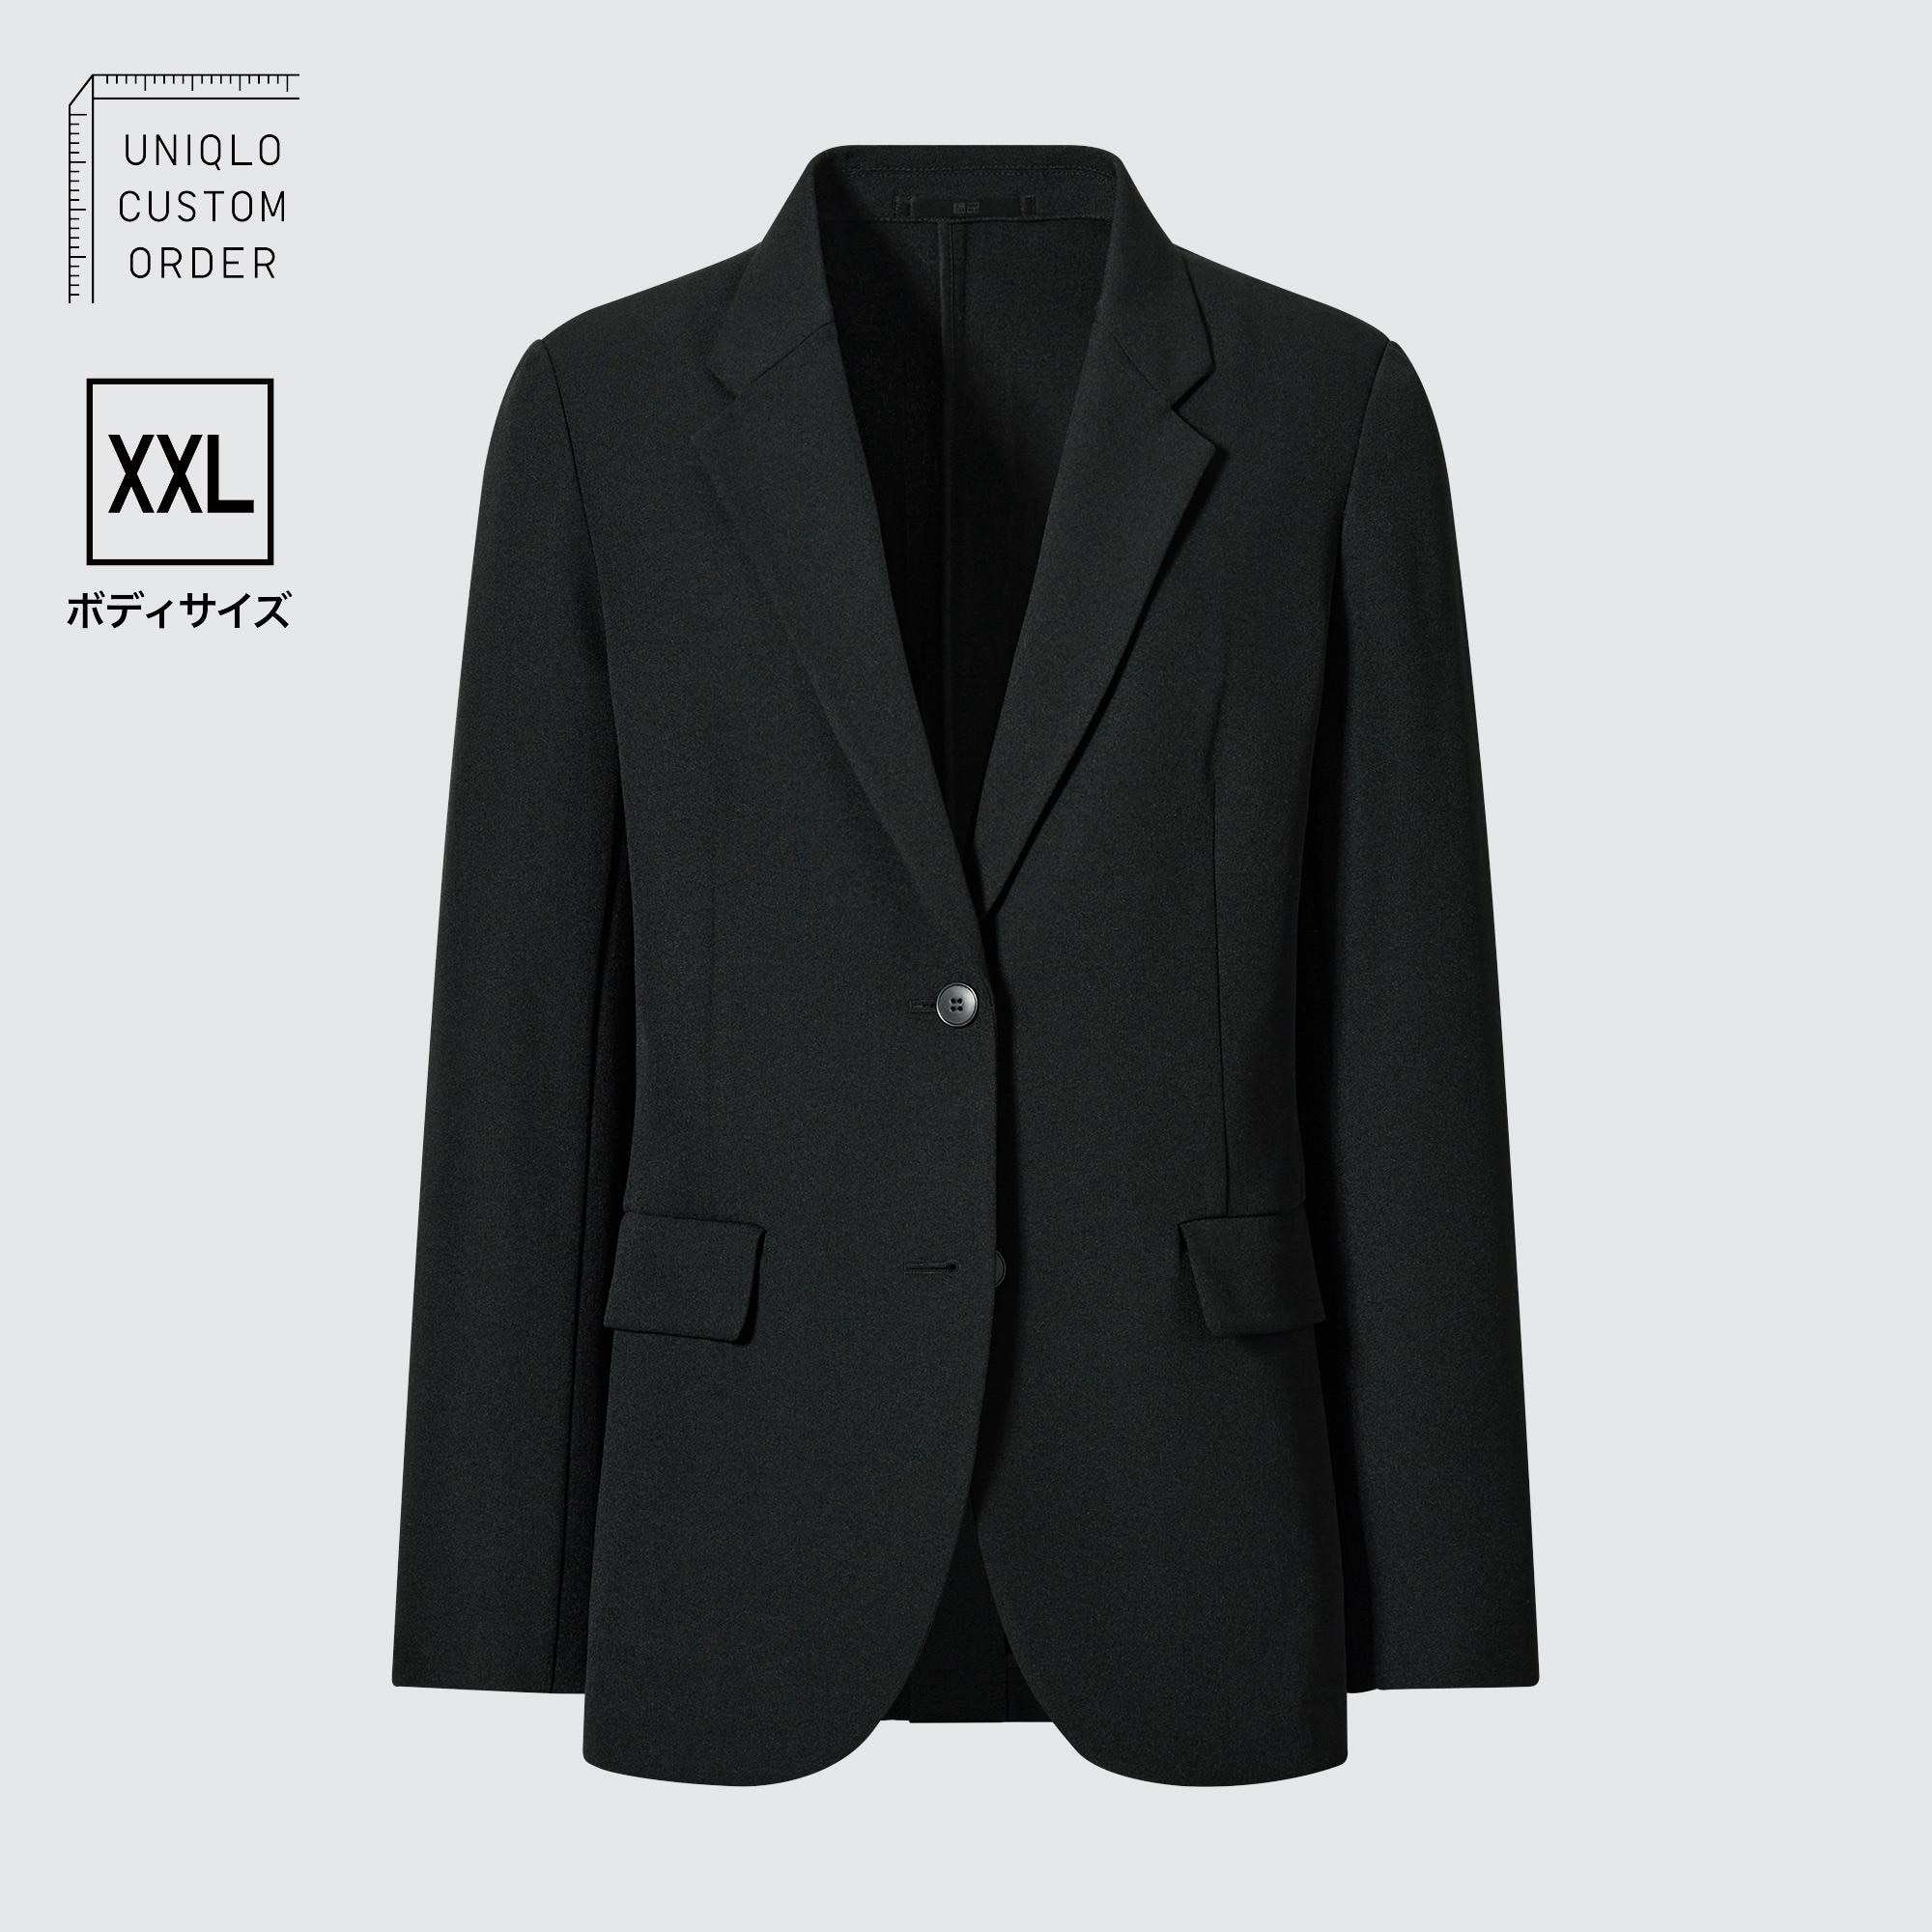 Куртка UNIQLO Кандо XXL, черный цена и фото